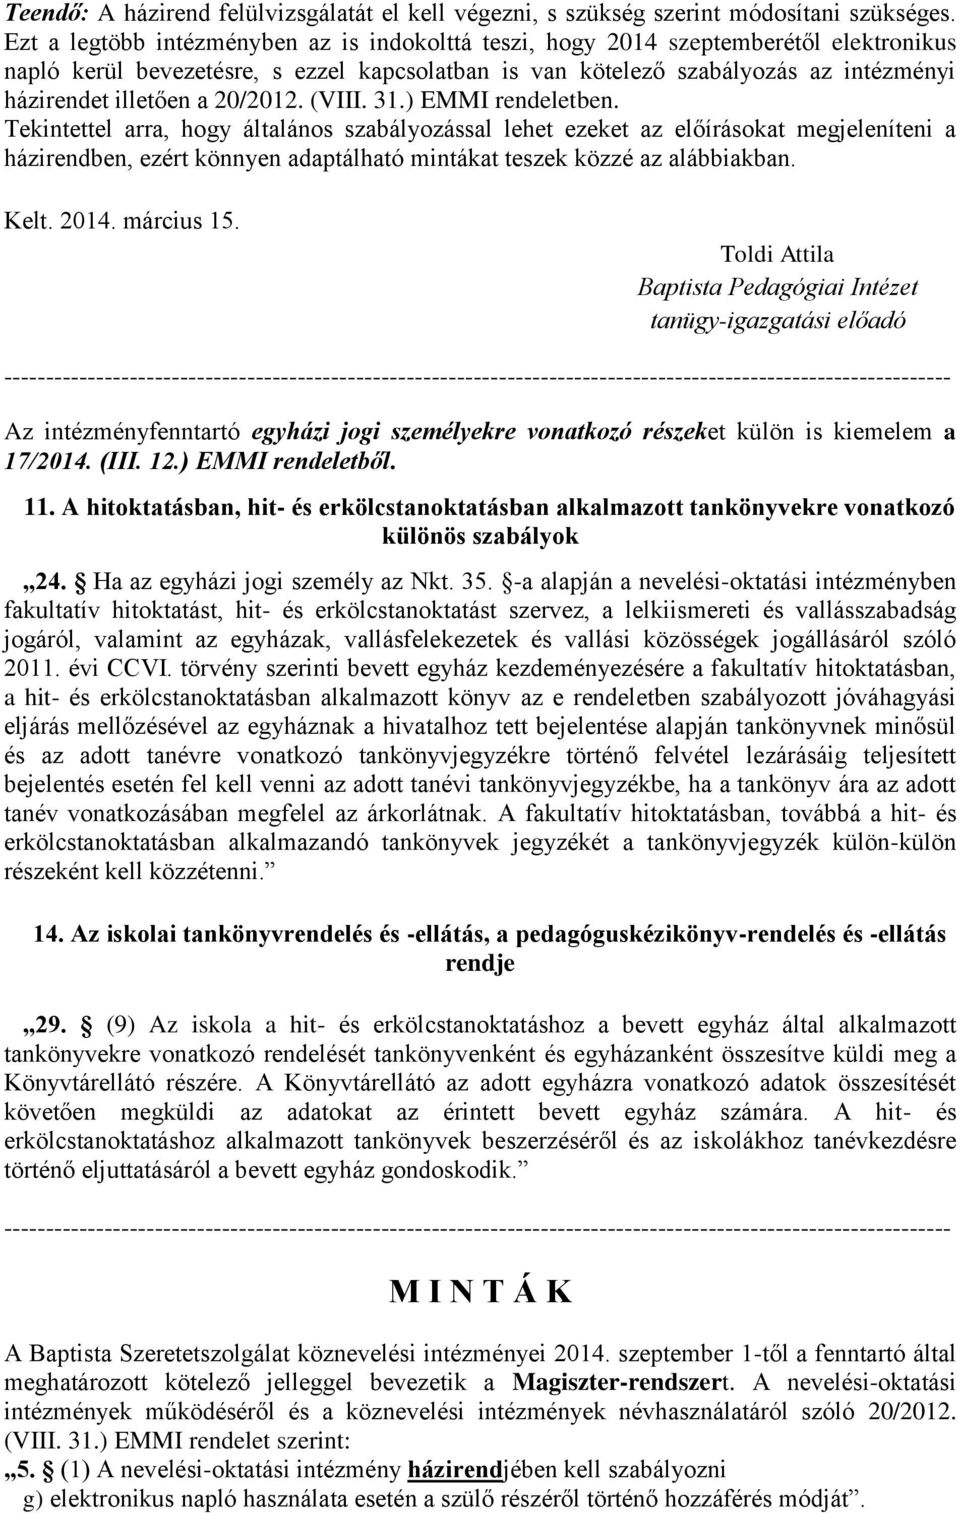 20/2012. (VIII. 31.) EMMI rendeletben.